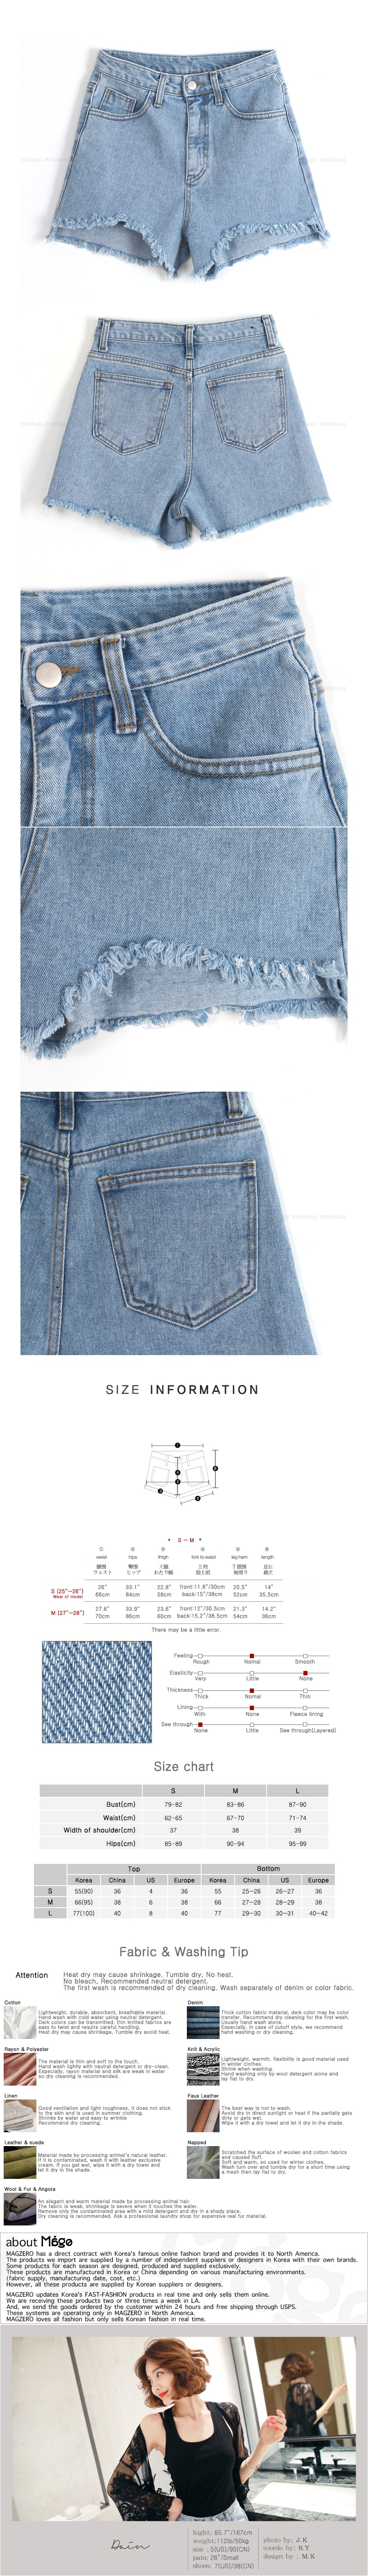 KOREA High-Rise Frayed Denim Shorts #Light Blue M(27-28) [Free Shipping]